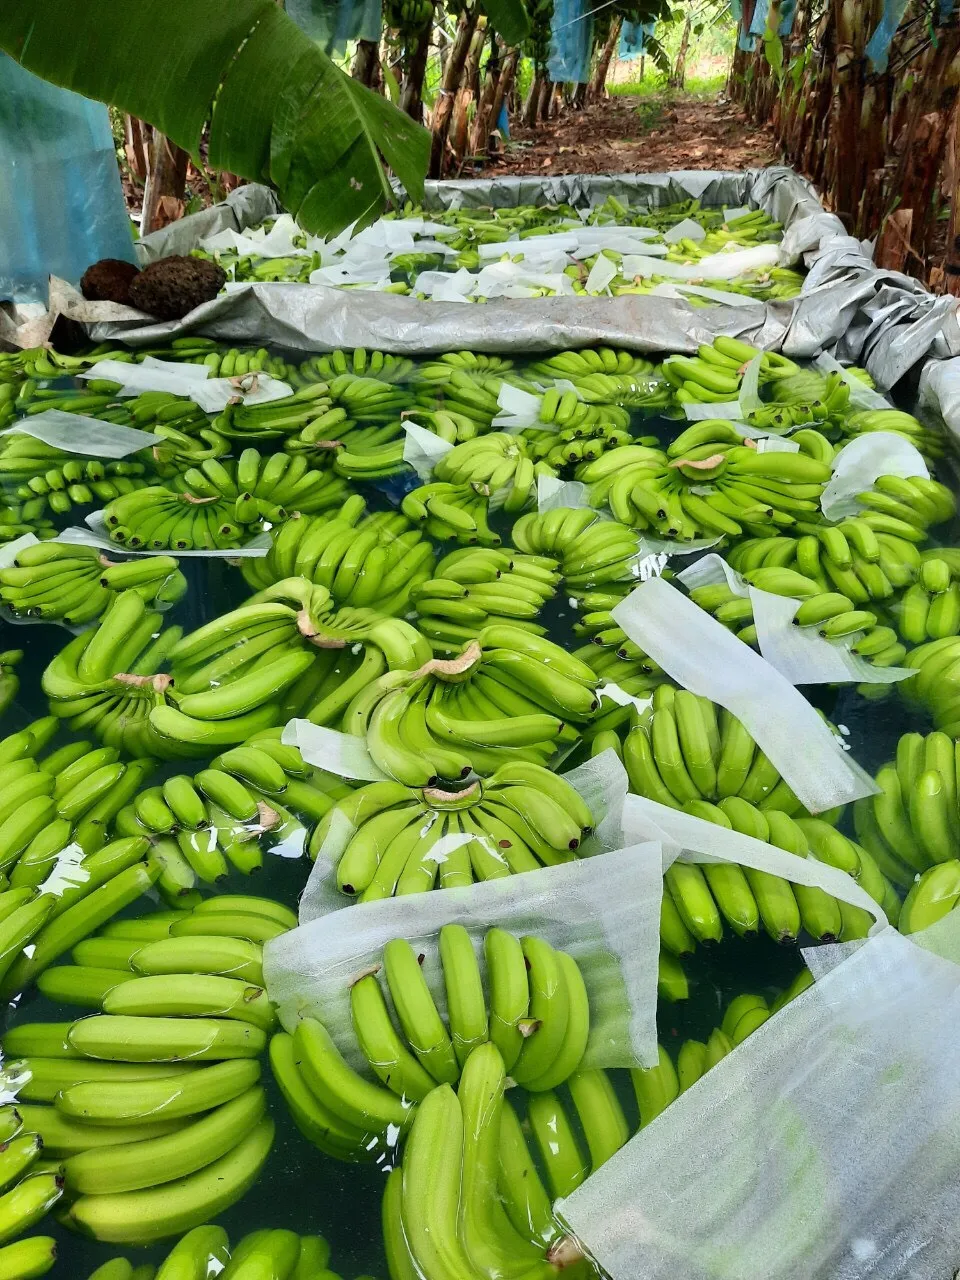 Cavendish Banana exporter from India